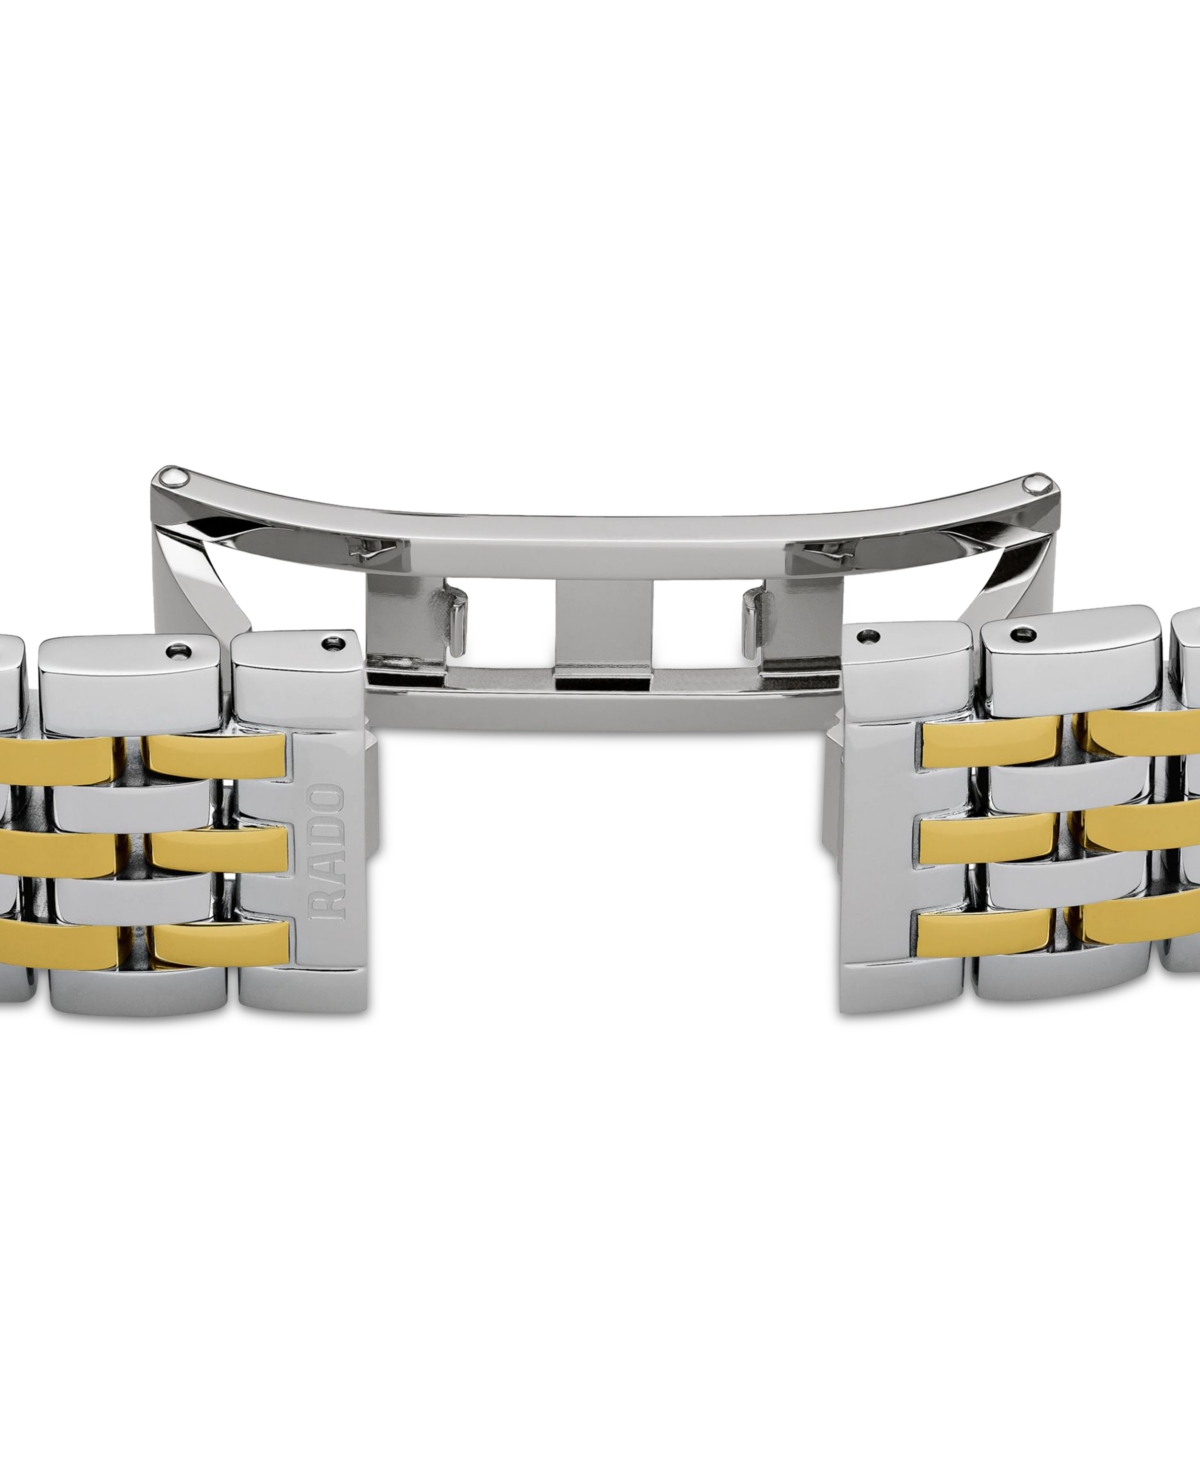 Shop Rado Florence Men's Black Stainless Steel Bracelet Watch 38mm